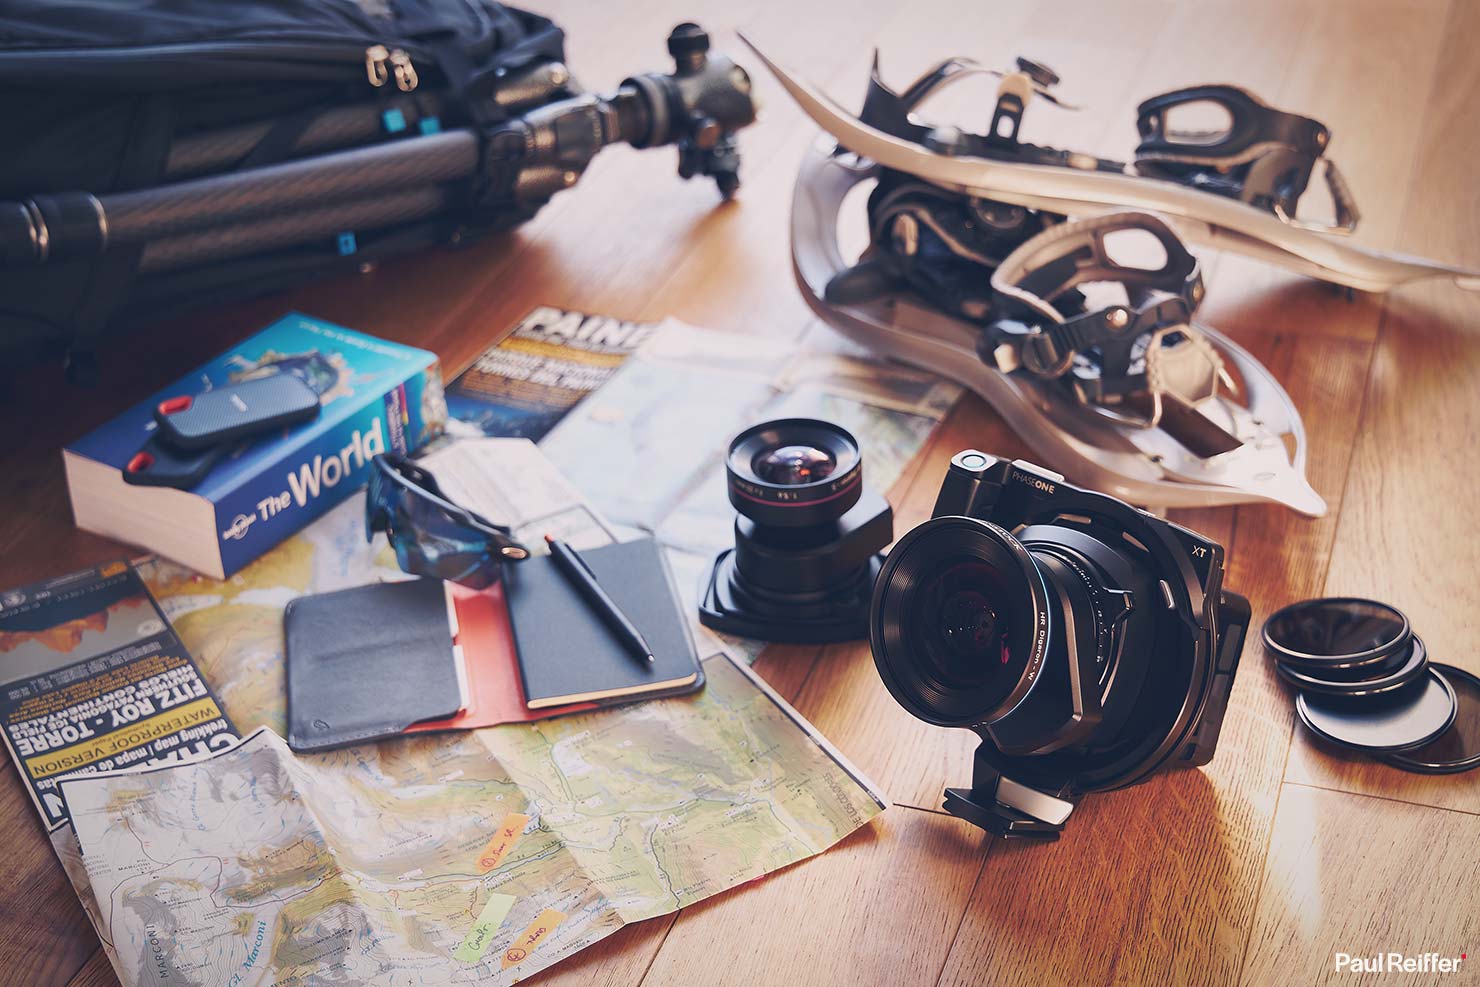 Phase One Xt Paul Reiffer Global Brand Ambassador Medium Format Nya Evo World Travel Gitzo Tripod Bts Packing Gear Kit Shot